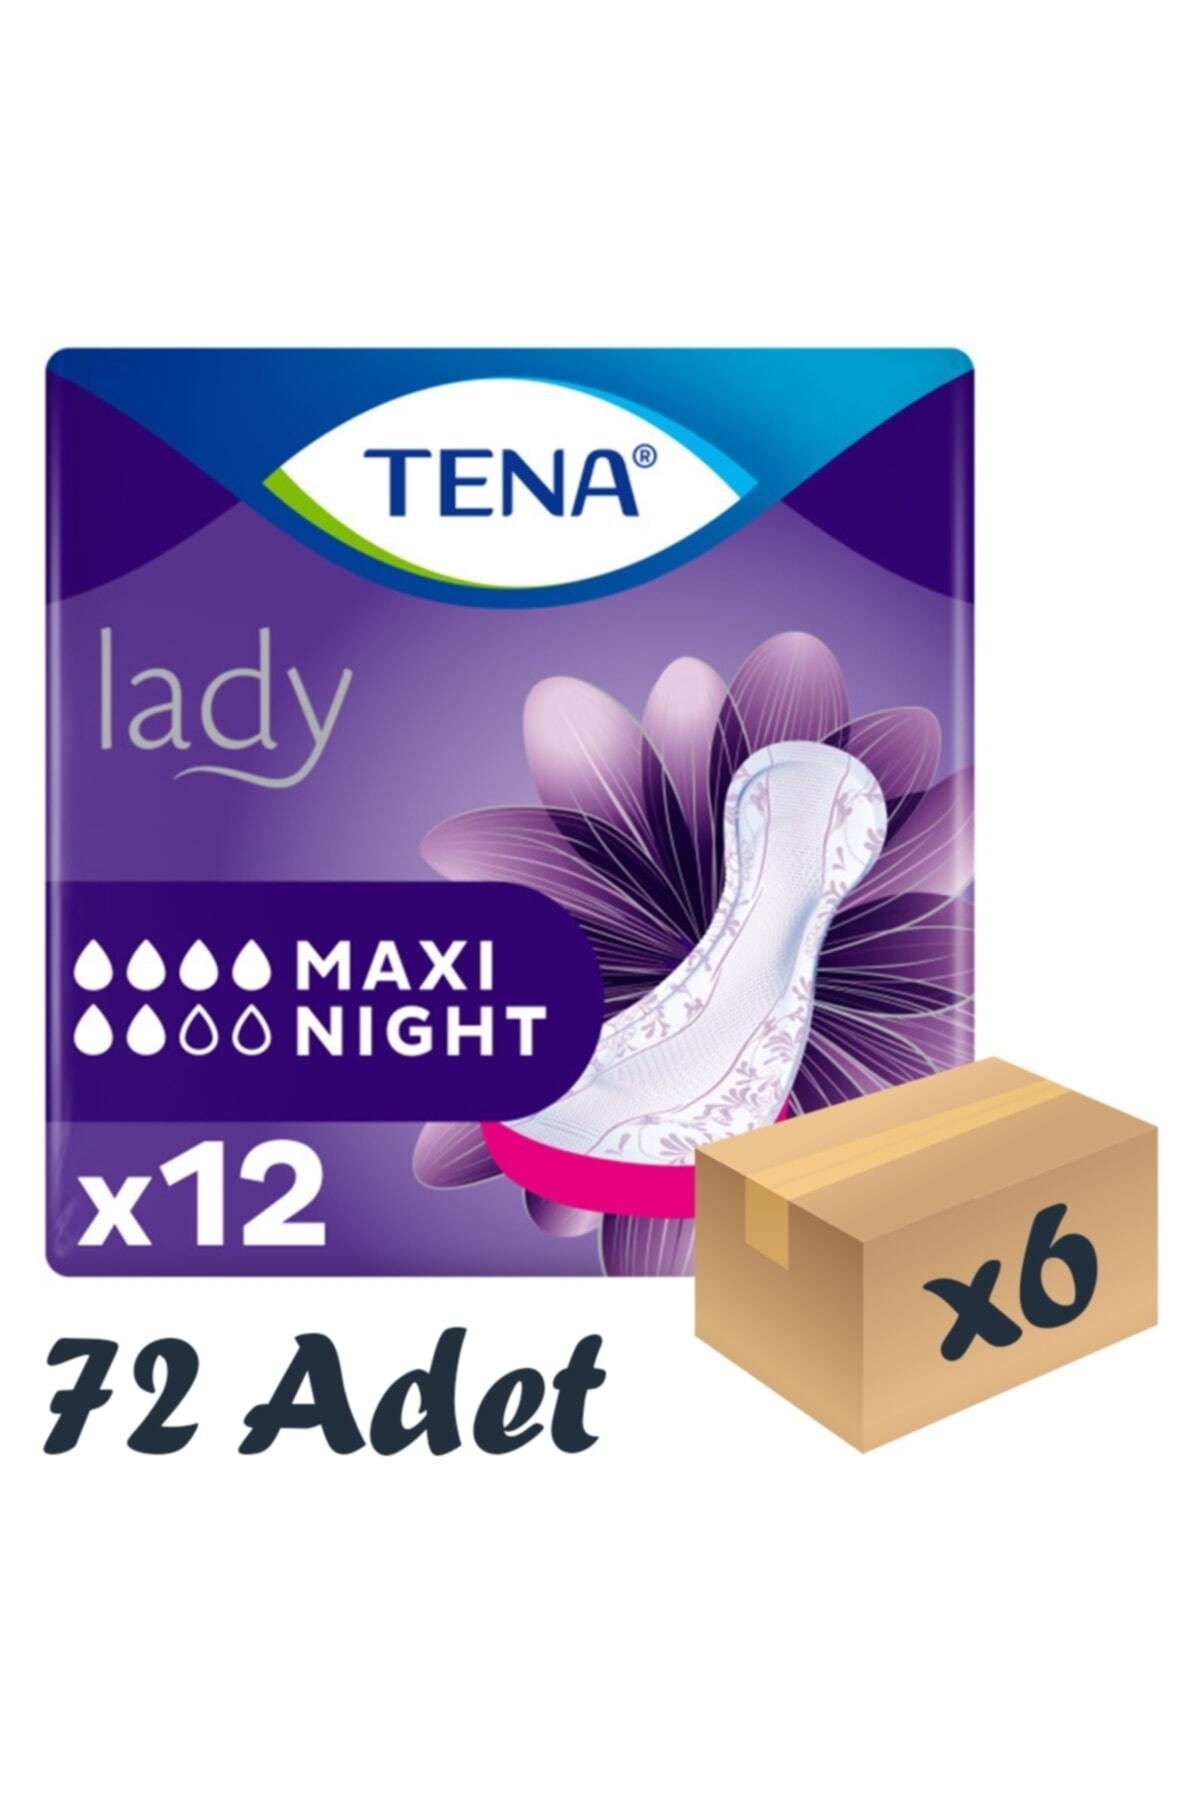 TENA Lady Maxi Night, Kadın Gece Mesane Pedi, 6 Damla, 12'li 6 Paket 72 Adet